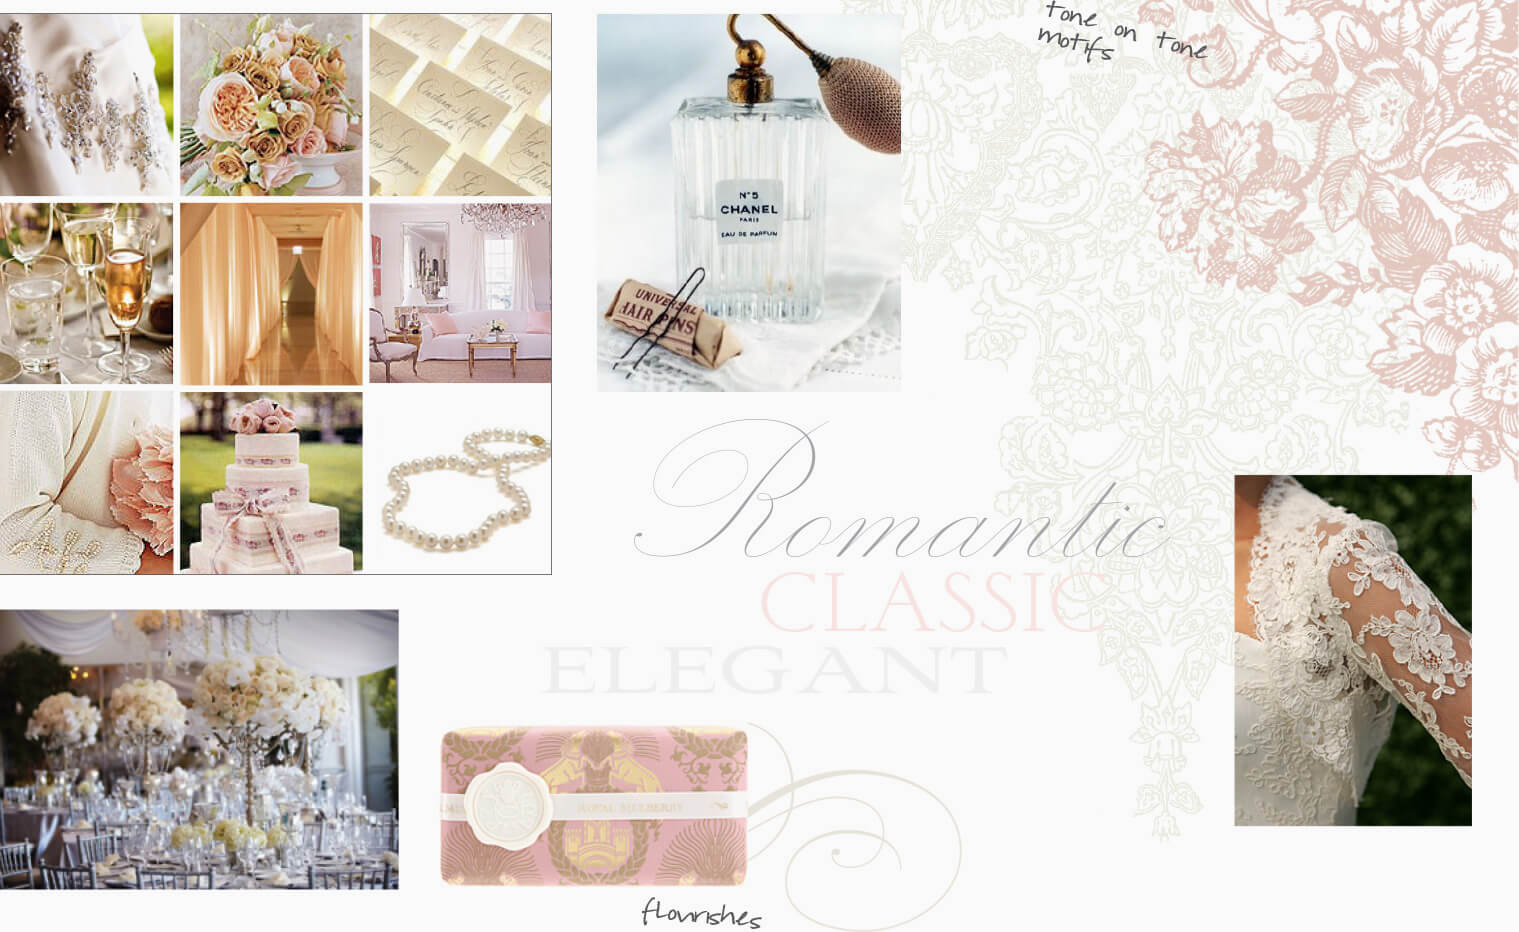 Romantic, classic and elegant wedding inspiration